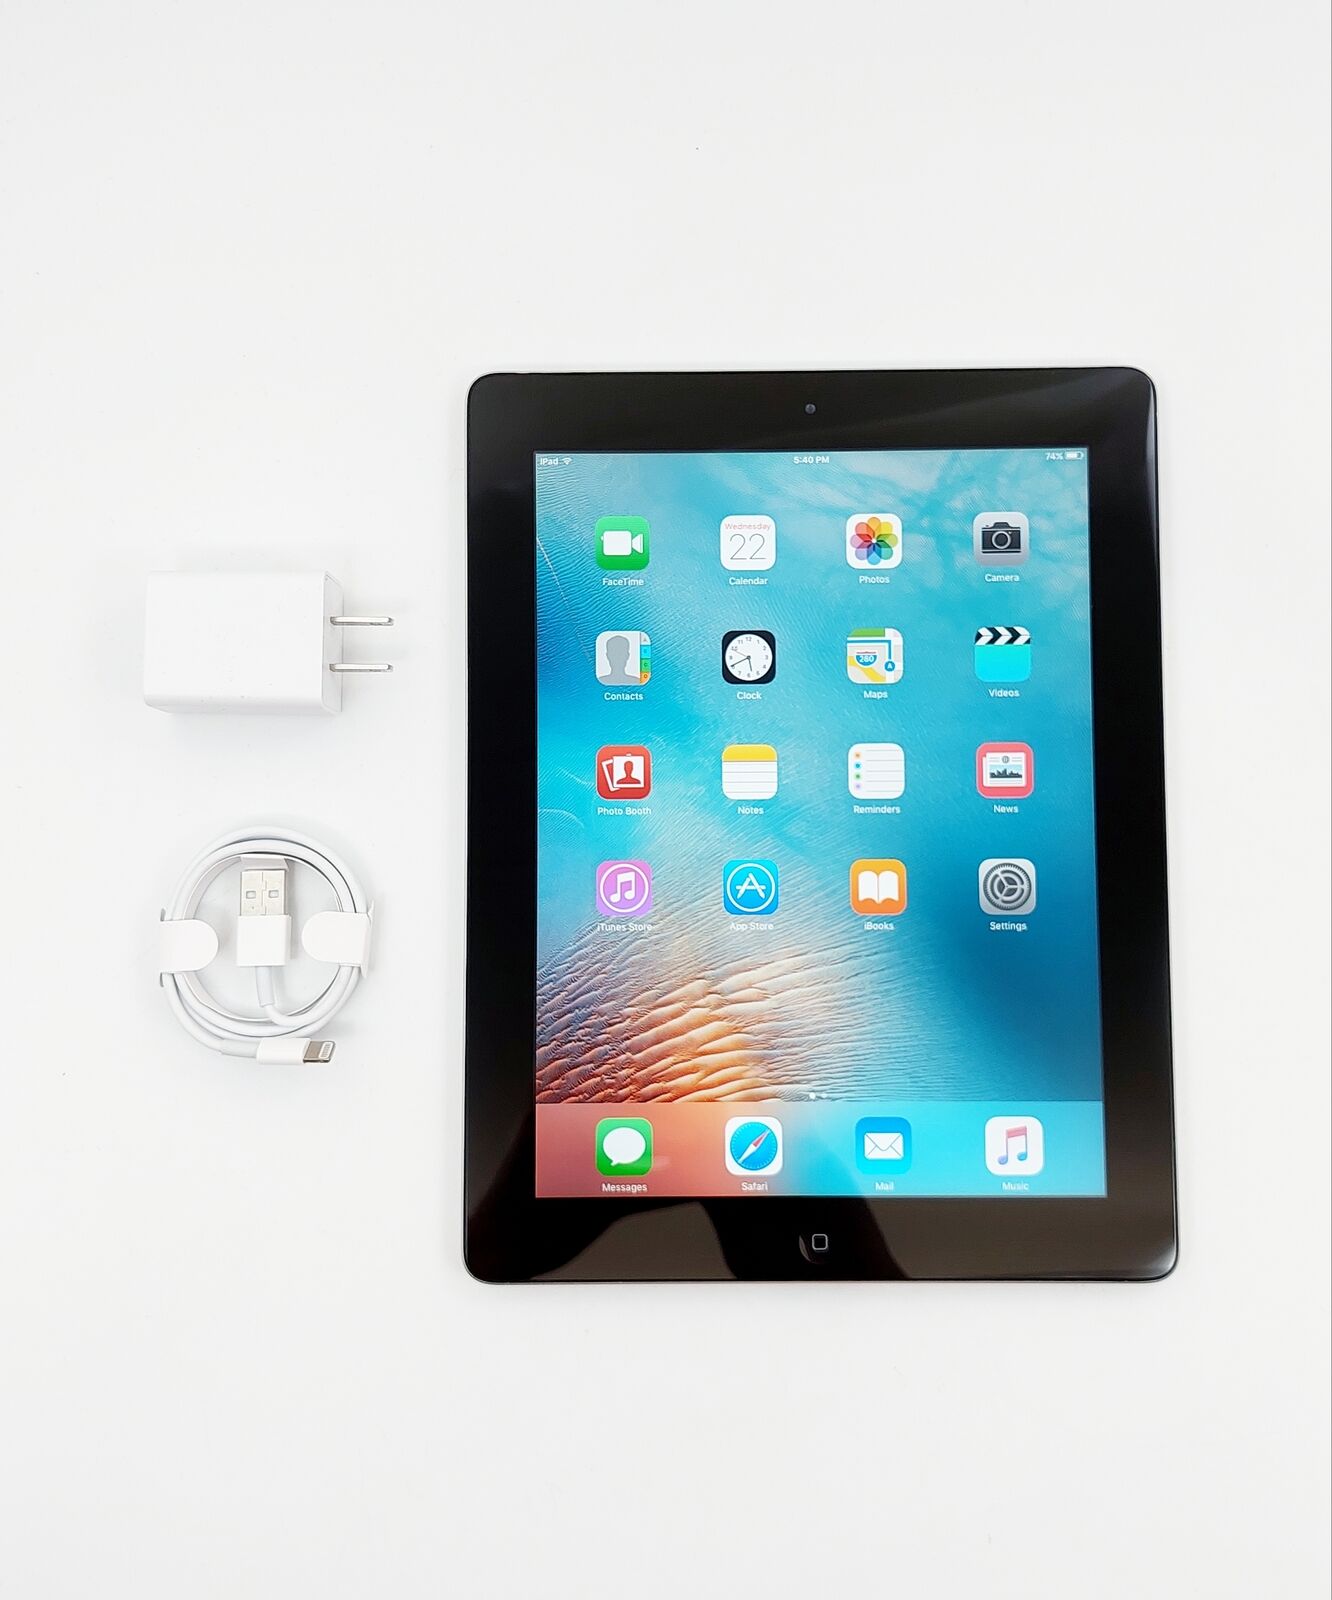 Restored Apple iPad 2 9.7" Display 16GB Wi-Fi OnlyTabel PC (Black) - MC769LL/A (Refurbished) - image 3 of 7